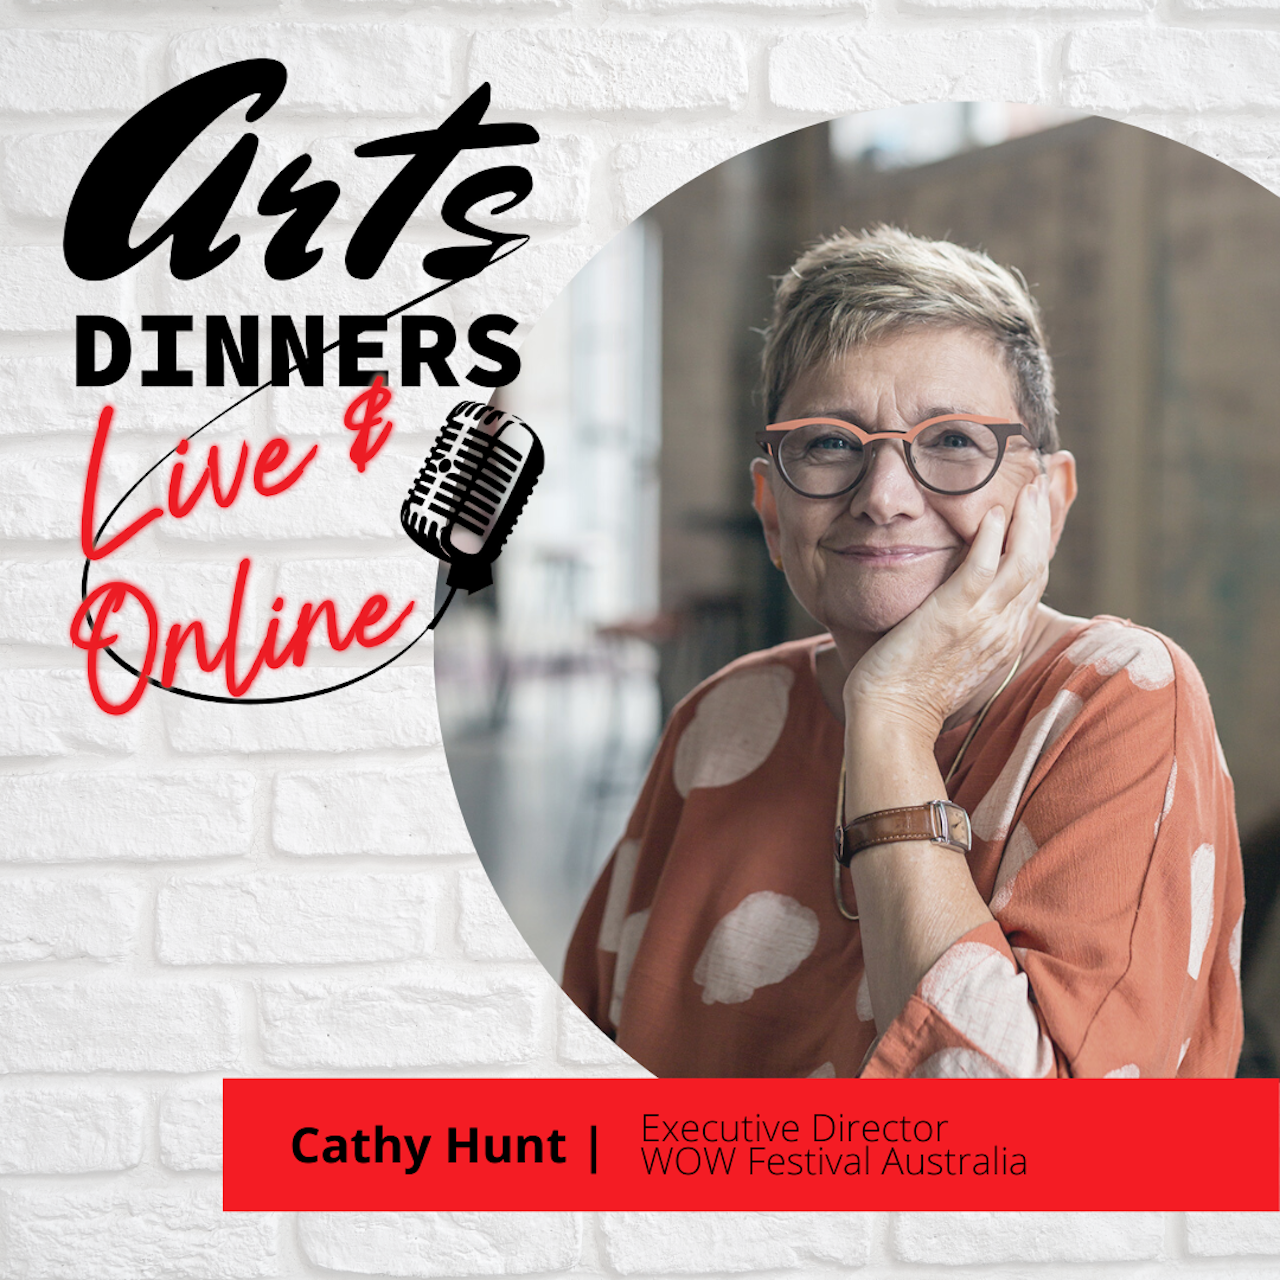 Cathy Hunt